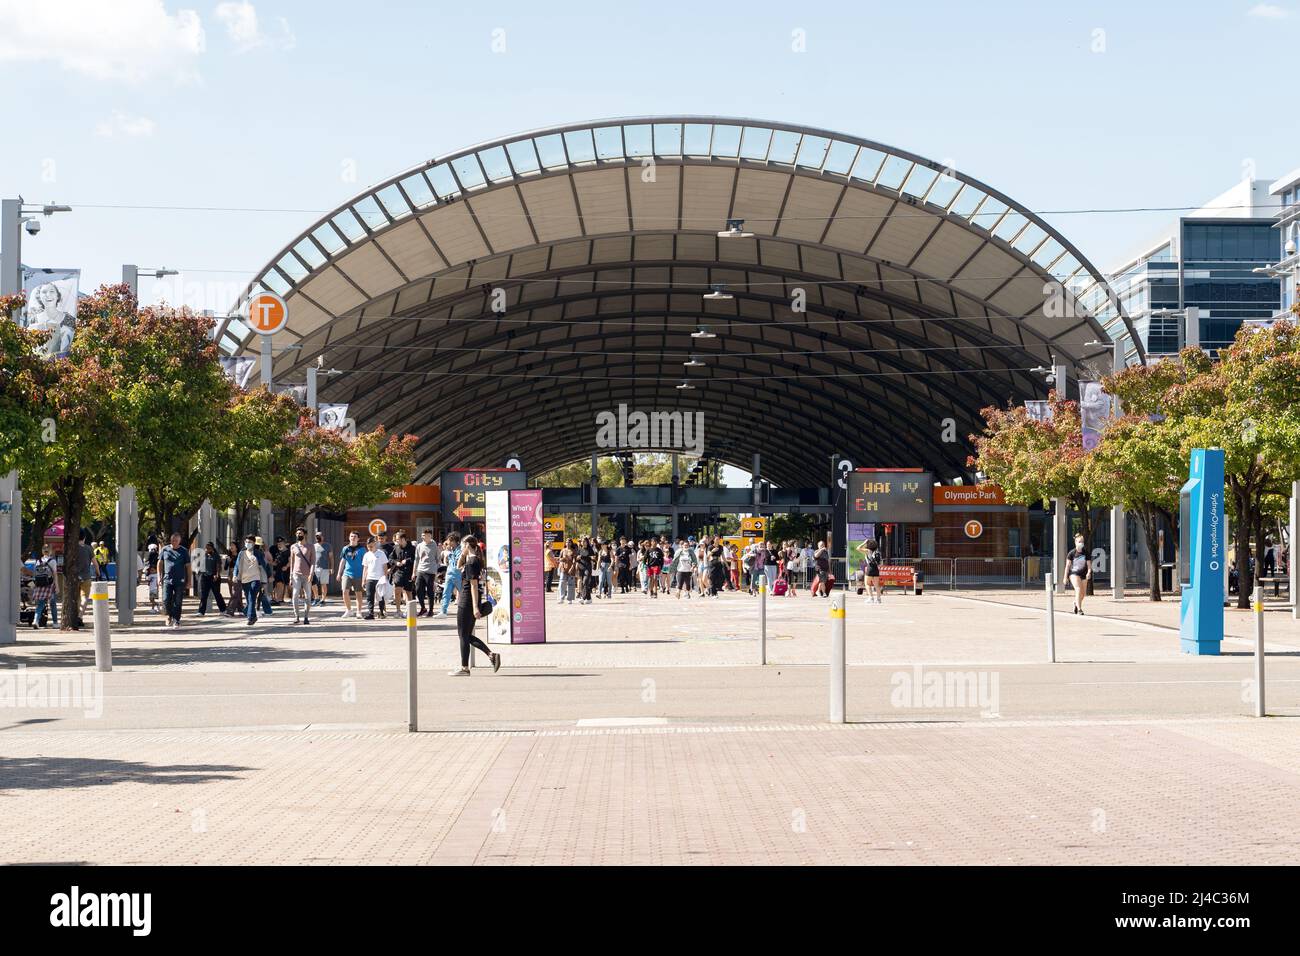 Bilder Bilder Fotos Abbildungen Vektoren Video Olympic Park Train Station, Sydney, Australien Stockfoto